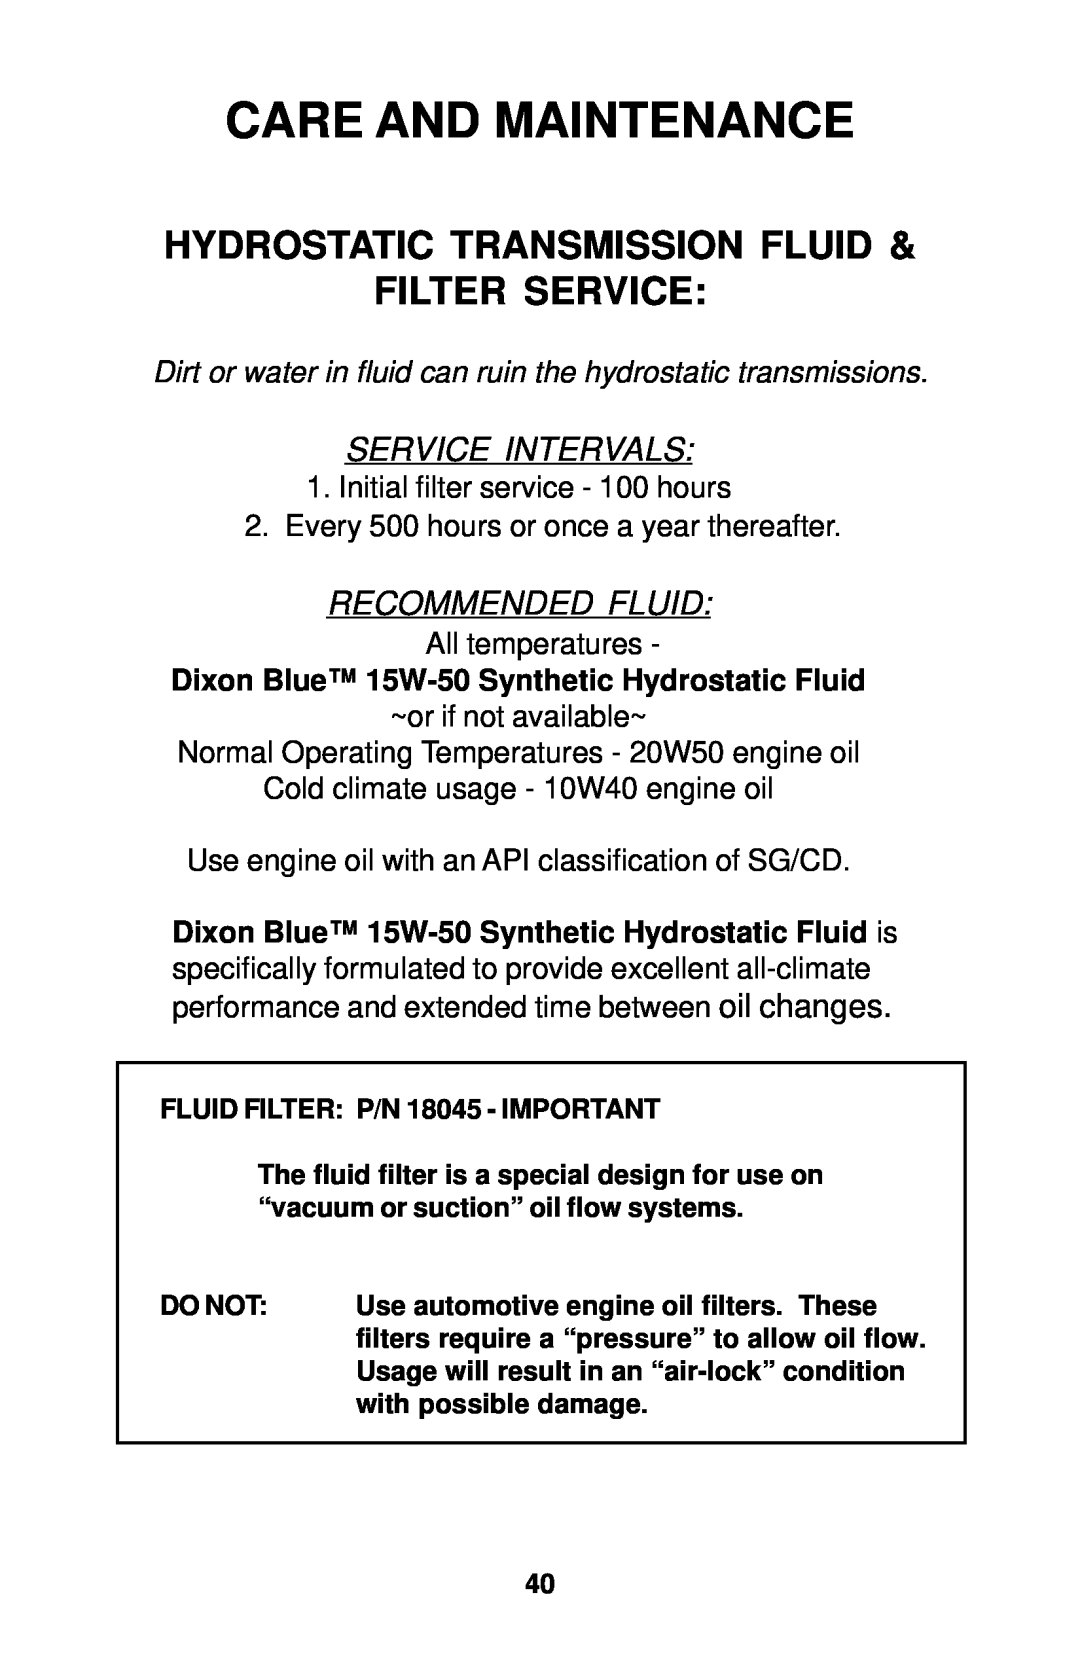 Dixon 18134-1004 manual Hydrostatic Transmission Fluid & Filter Service, Care And Maintenance, Service Intervals 